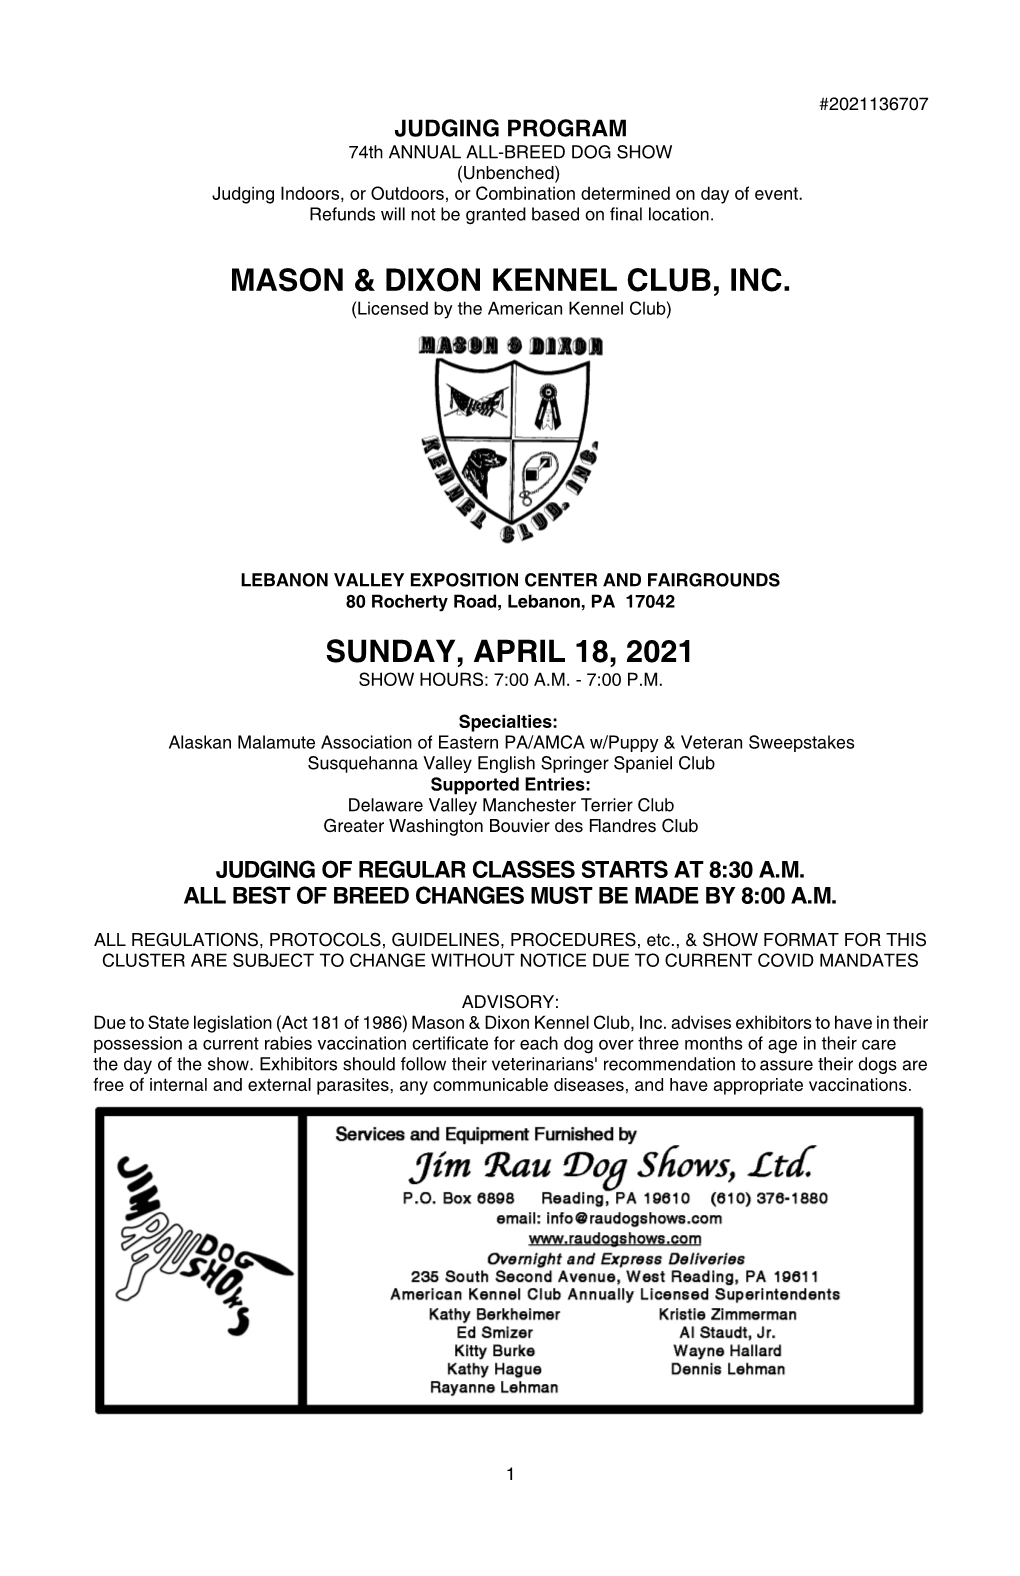 Mason & Dixon Kennel Club, Inc. Sunday, April 18, 2021